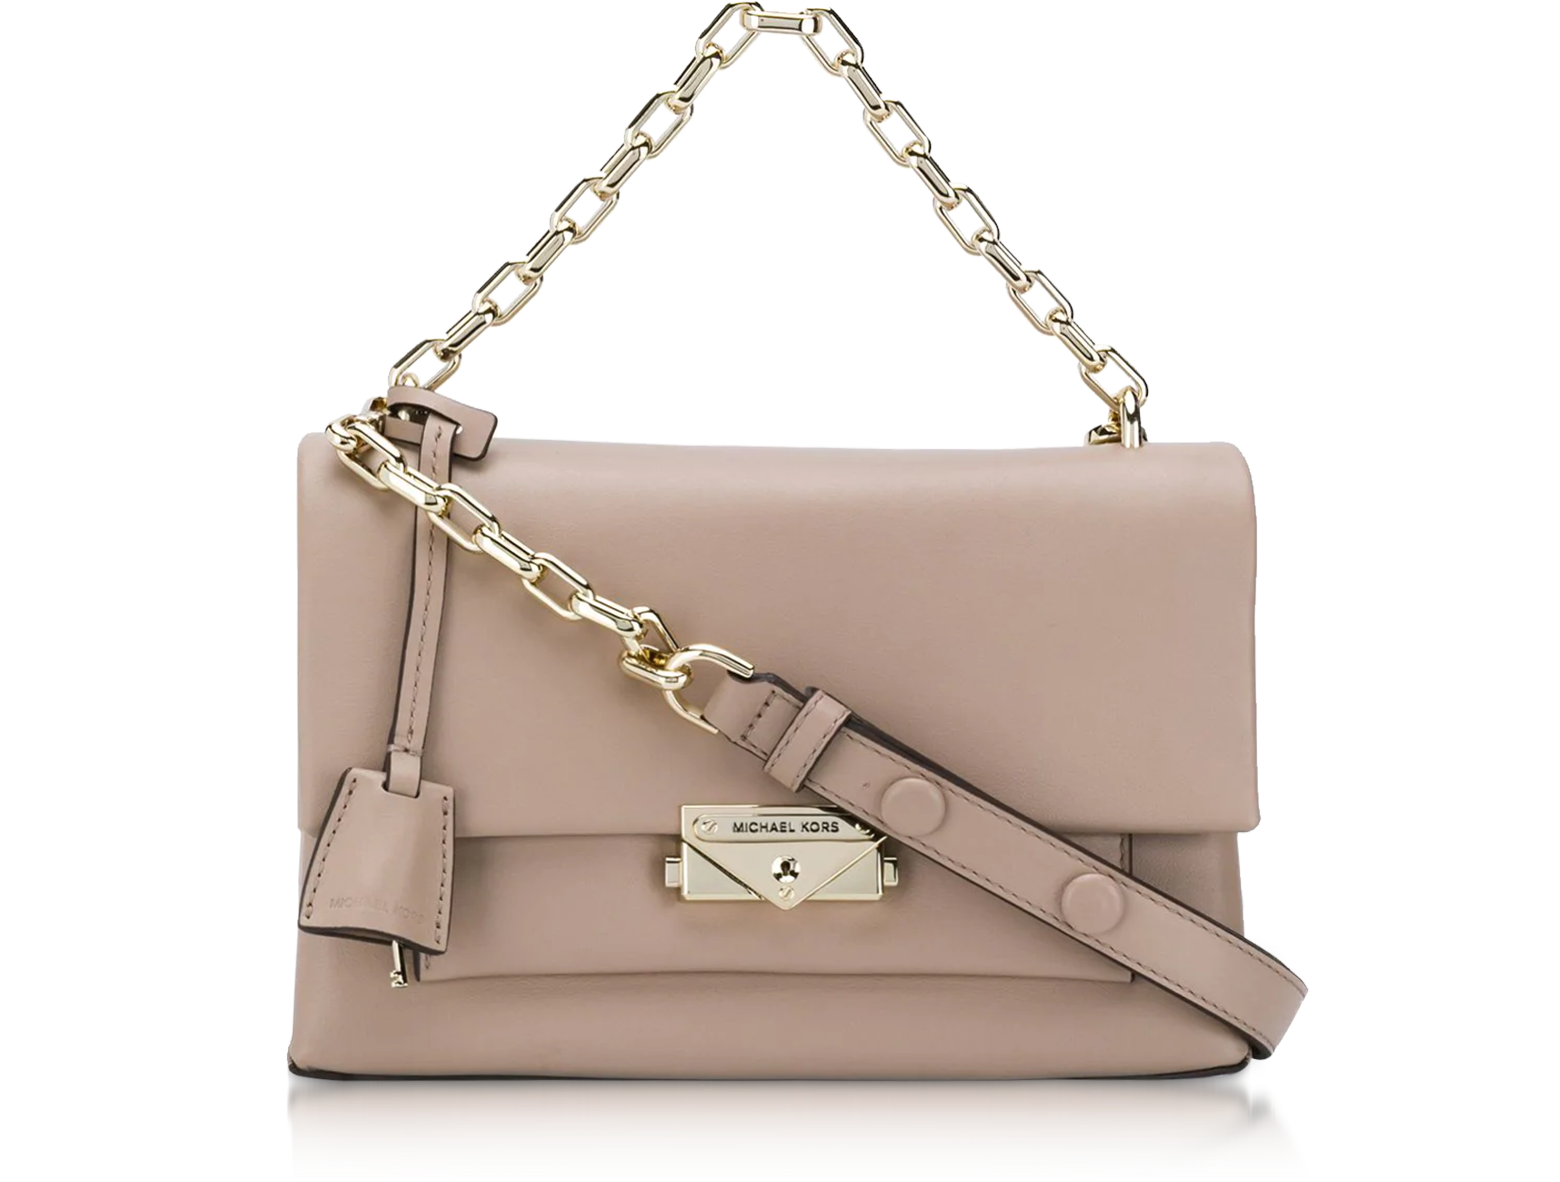 Michael Kors CeCe Leather Medium Chain Shoulder Bag in Truffle: Handbags